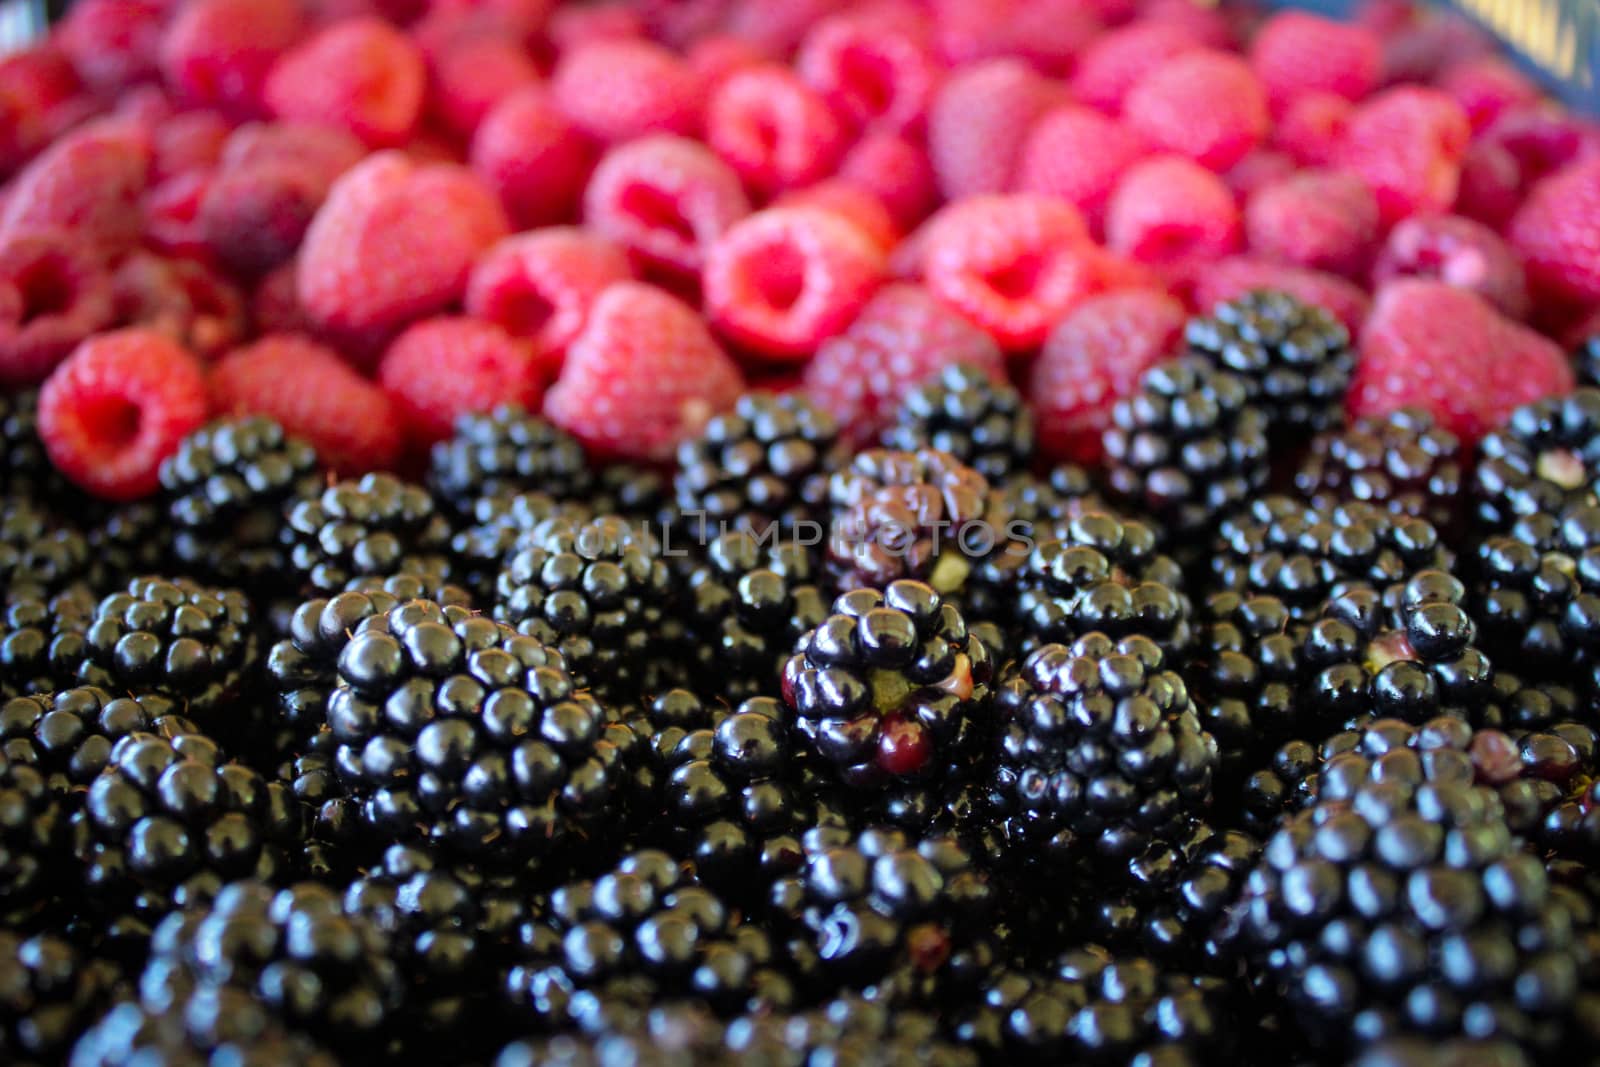 Close up of blackberries and raspberries in the background. Zavidovici, Bosnia and Herzegovina.